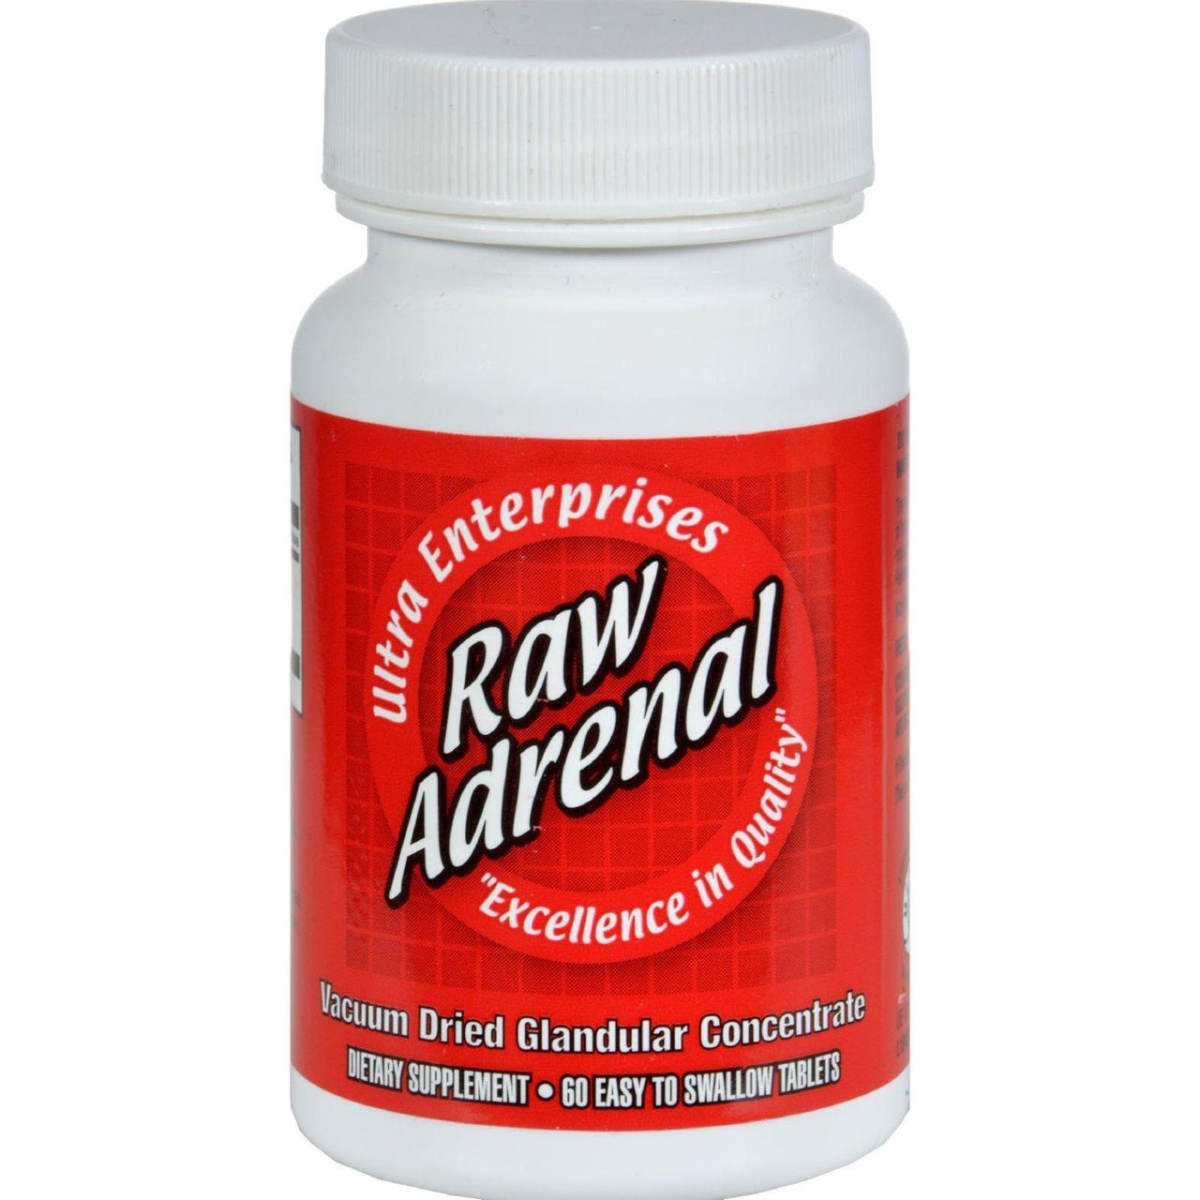 Hg0439075 200 Mg Raw Adrenal - 60 Tablets